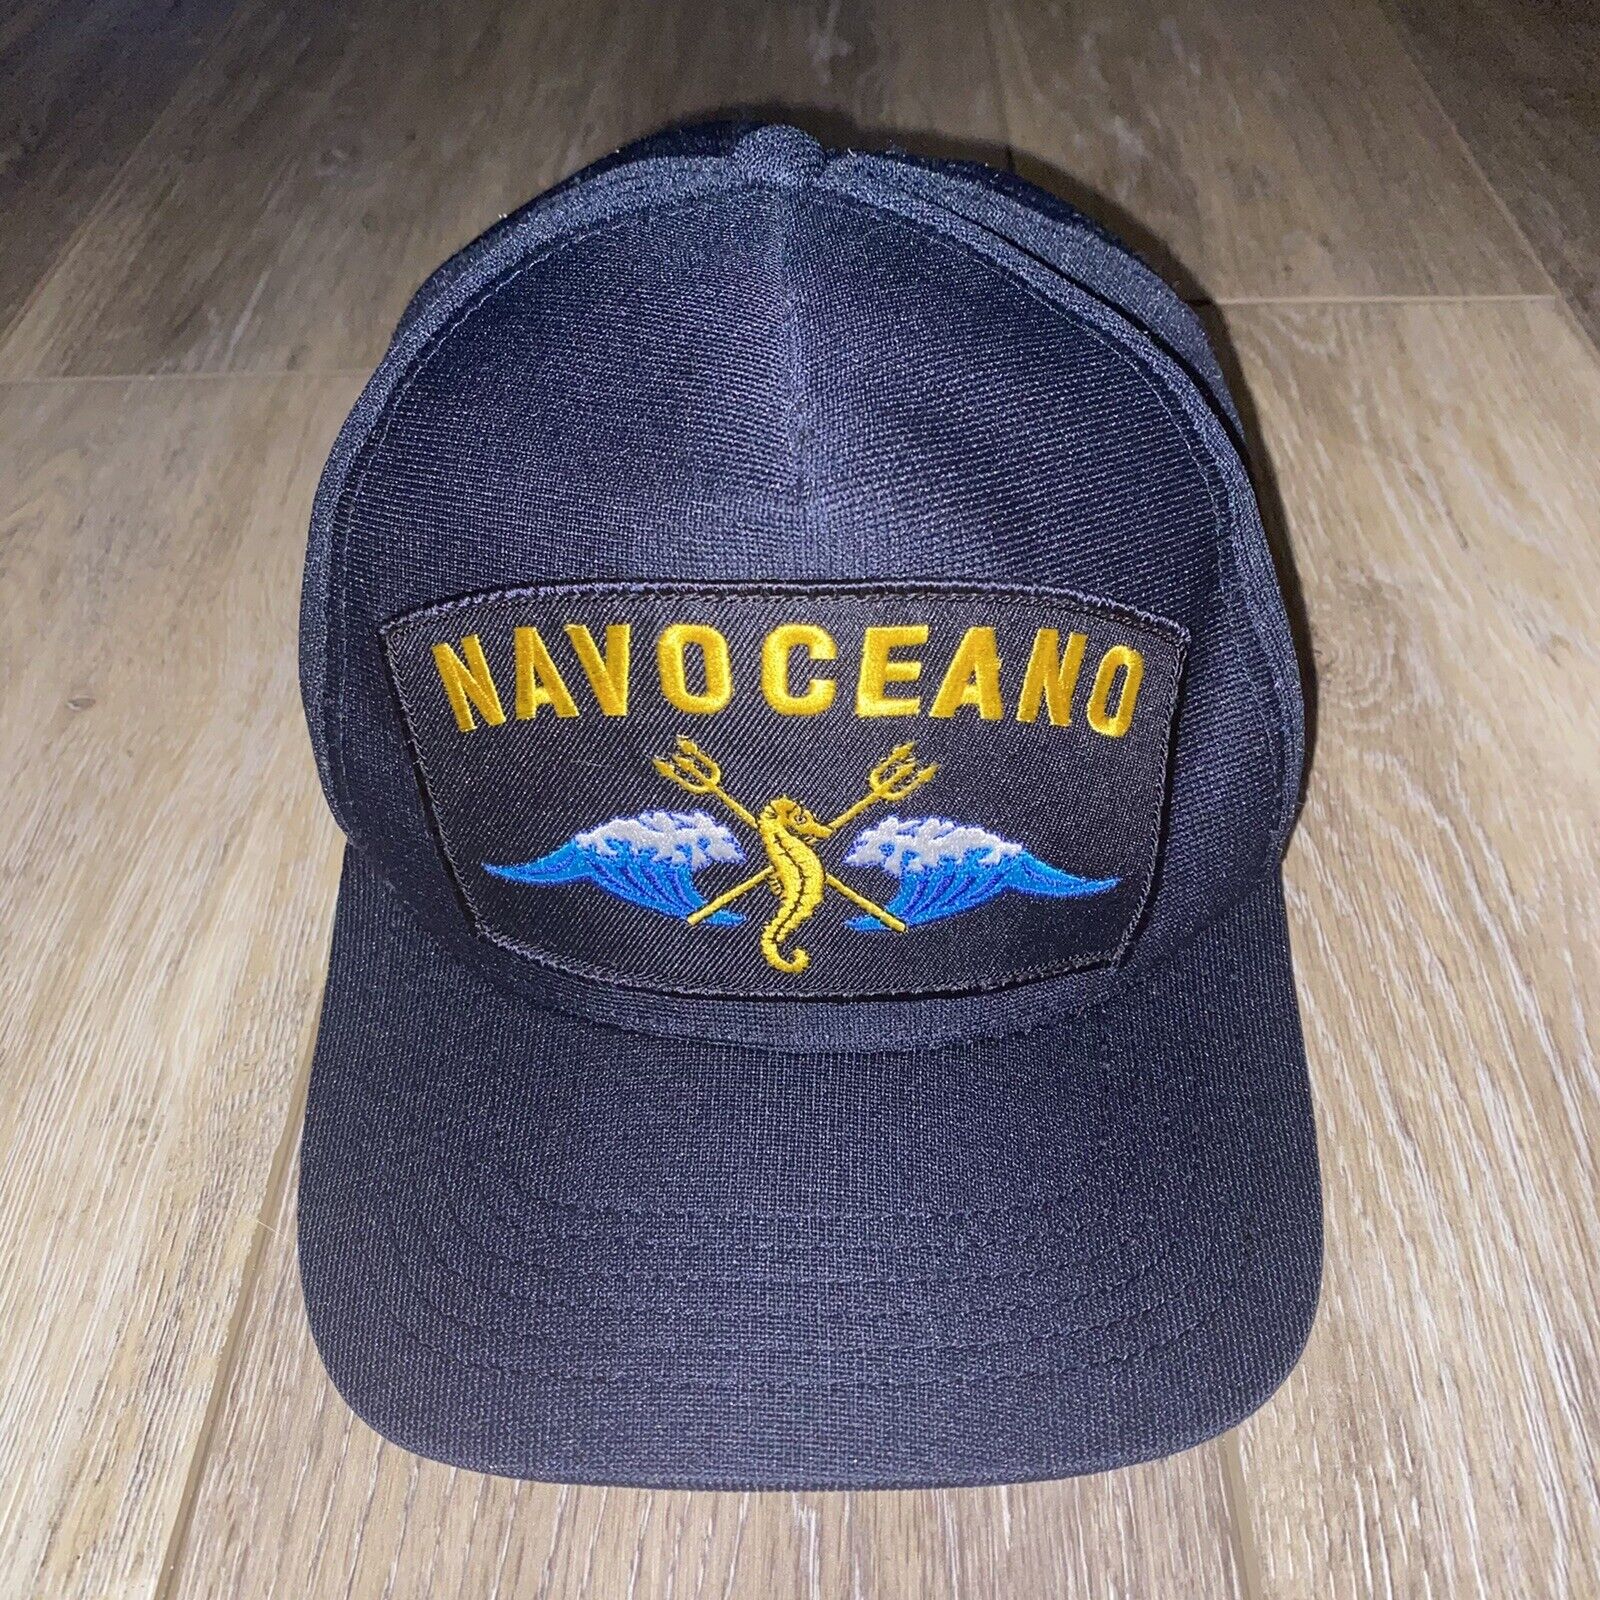 Vintage U.S. Navy NAS Oceana Hat Strapback Cap NAVOCEANO Made in USA